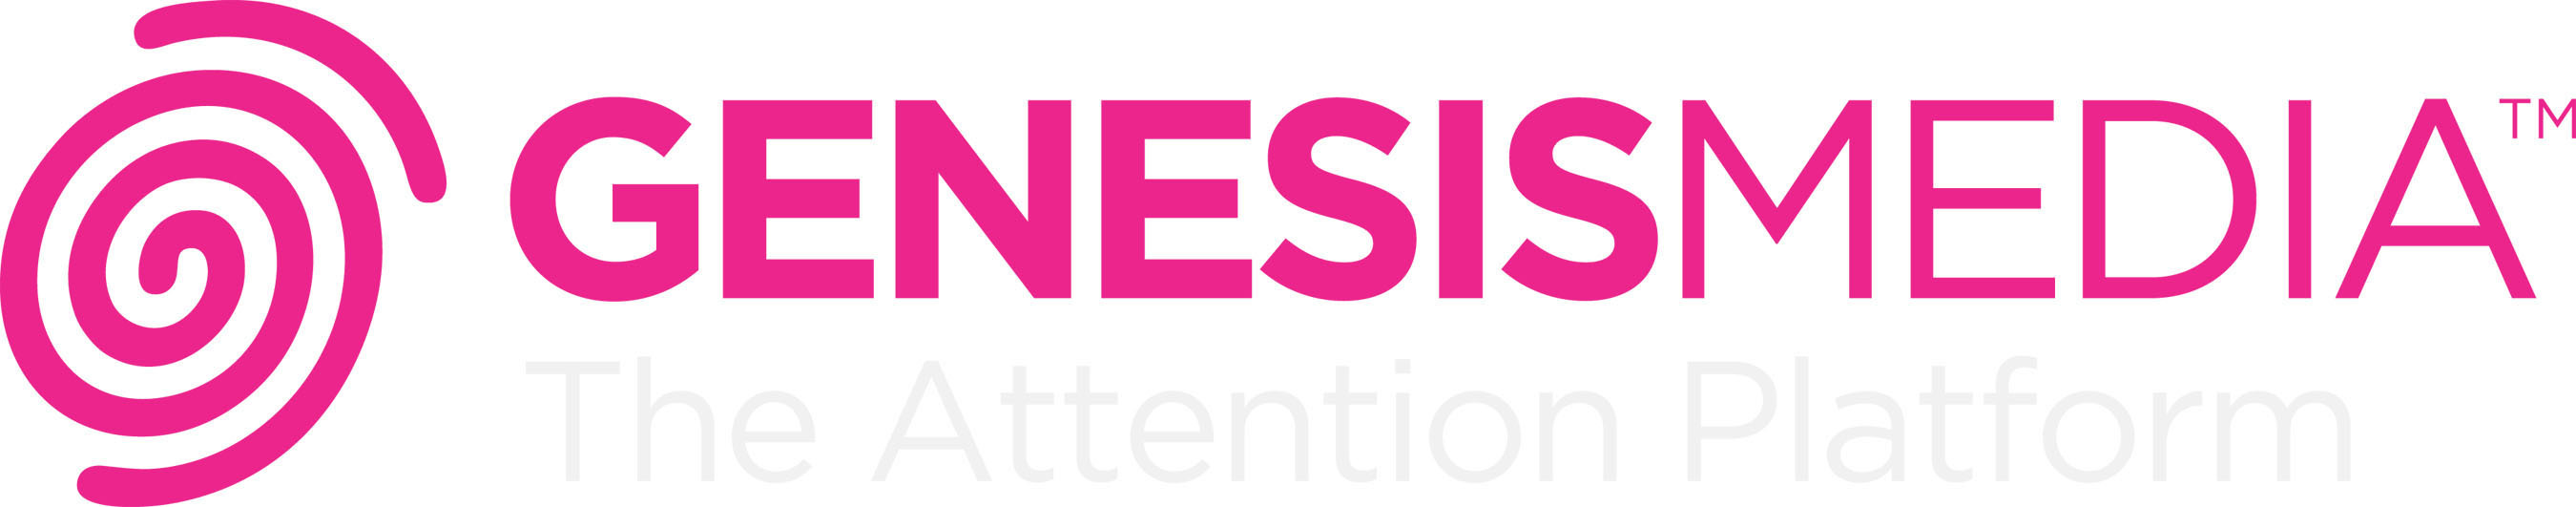 Genesis Media Logo